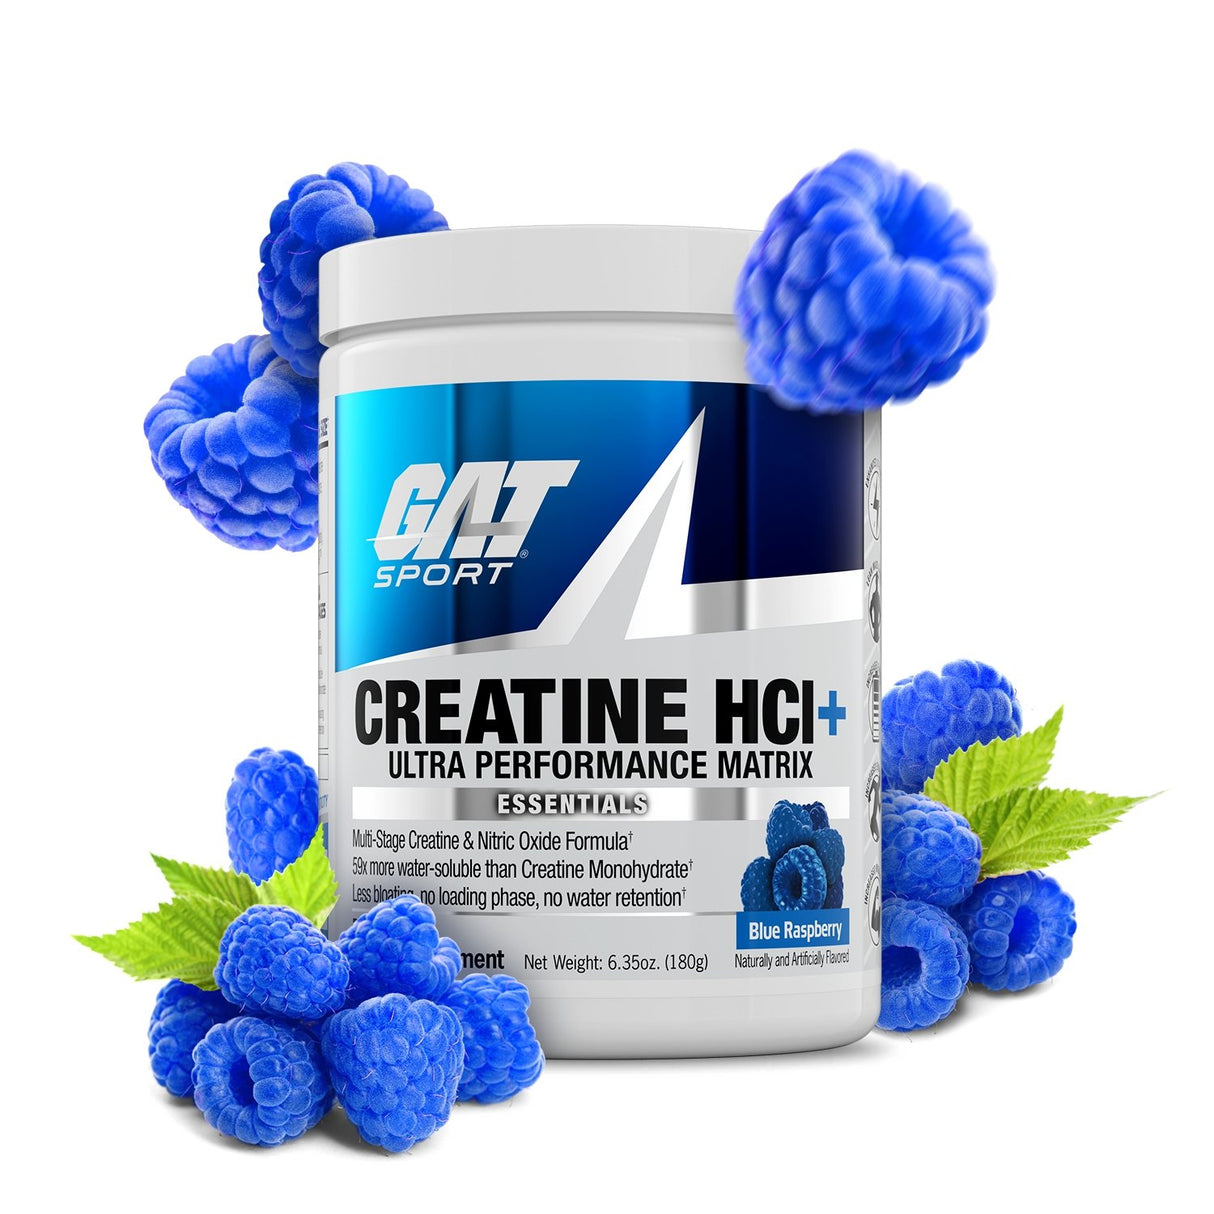 GAT SPORT CREATINE HCI+ N03-T Nitrate Matrix - blue raspberry